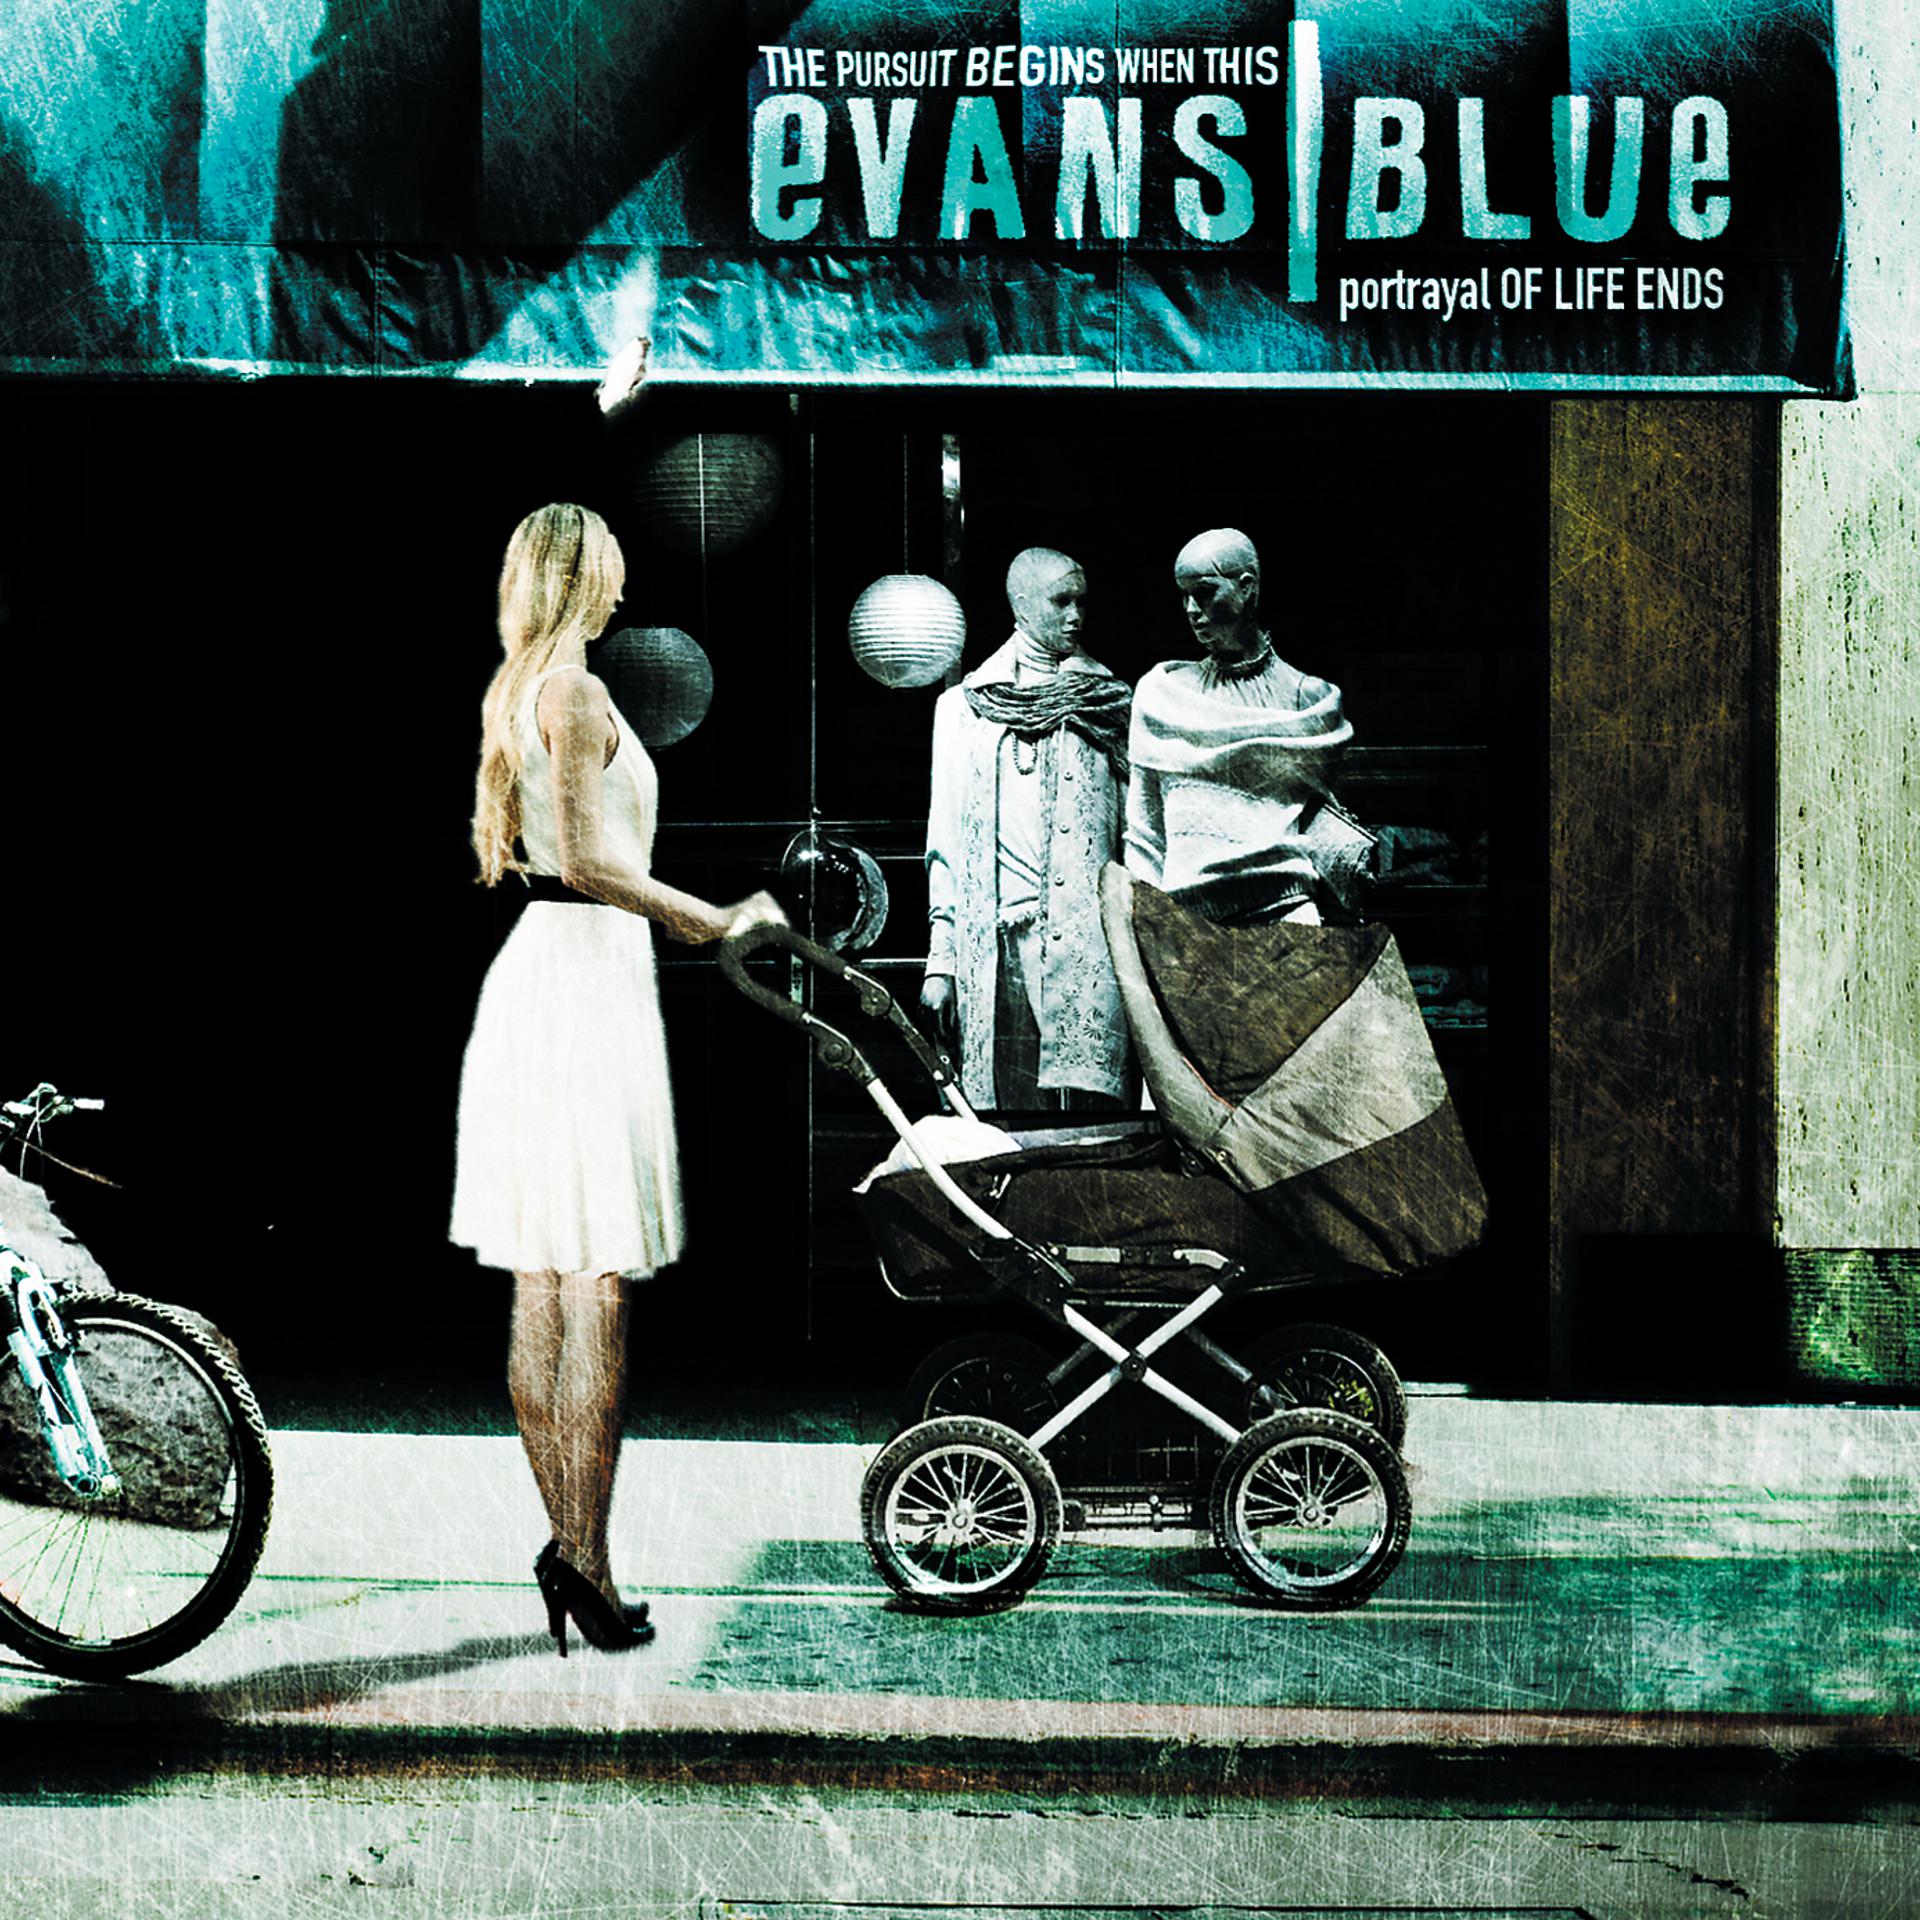 His life ended. Evans Blue - the Pursuit begins when this portrayal of Life ends (2007). Evans Blue. Evans Blue 2006. Portrayal группа.